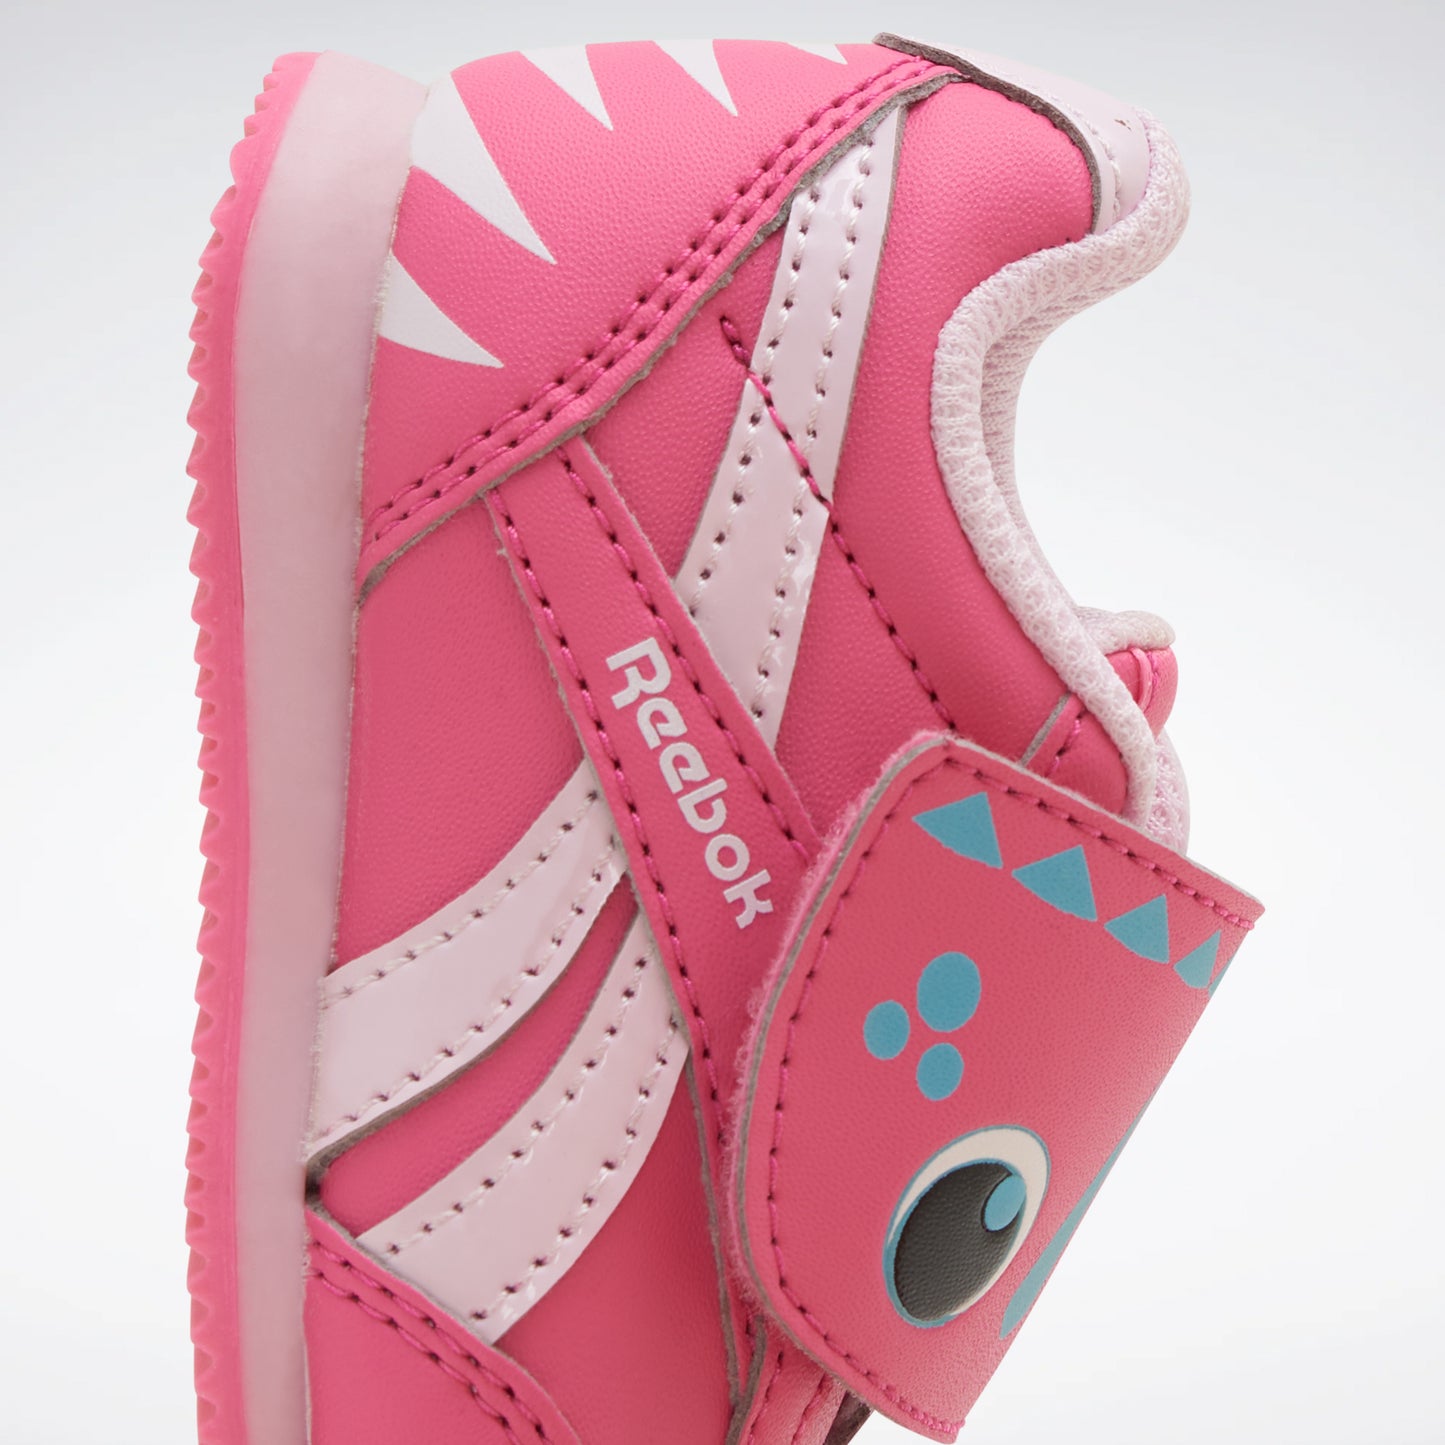 Royal Classic Jogger 2 Shoes True Pink/Pixel Pink/Dig Blue